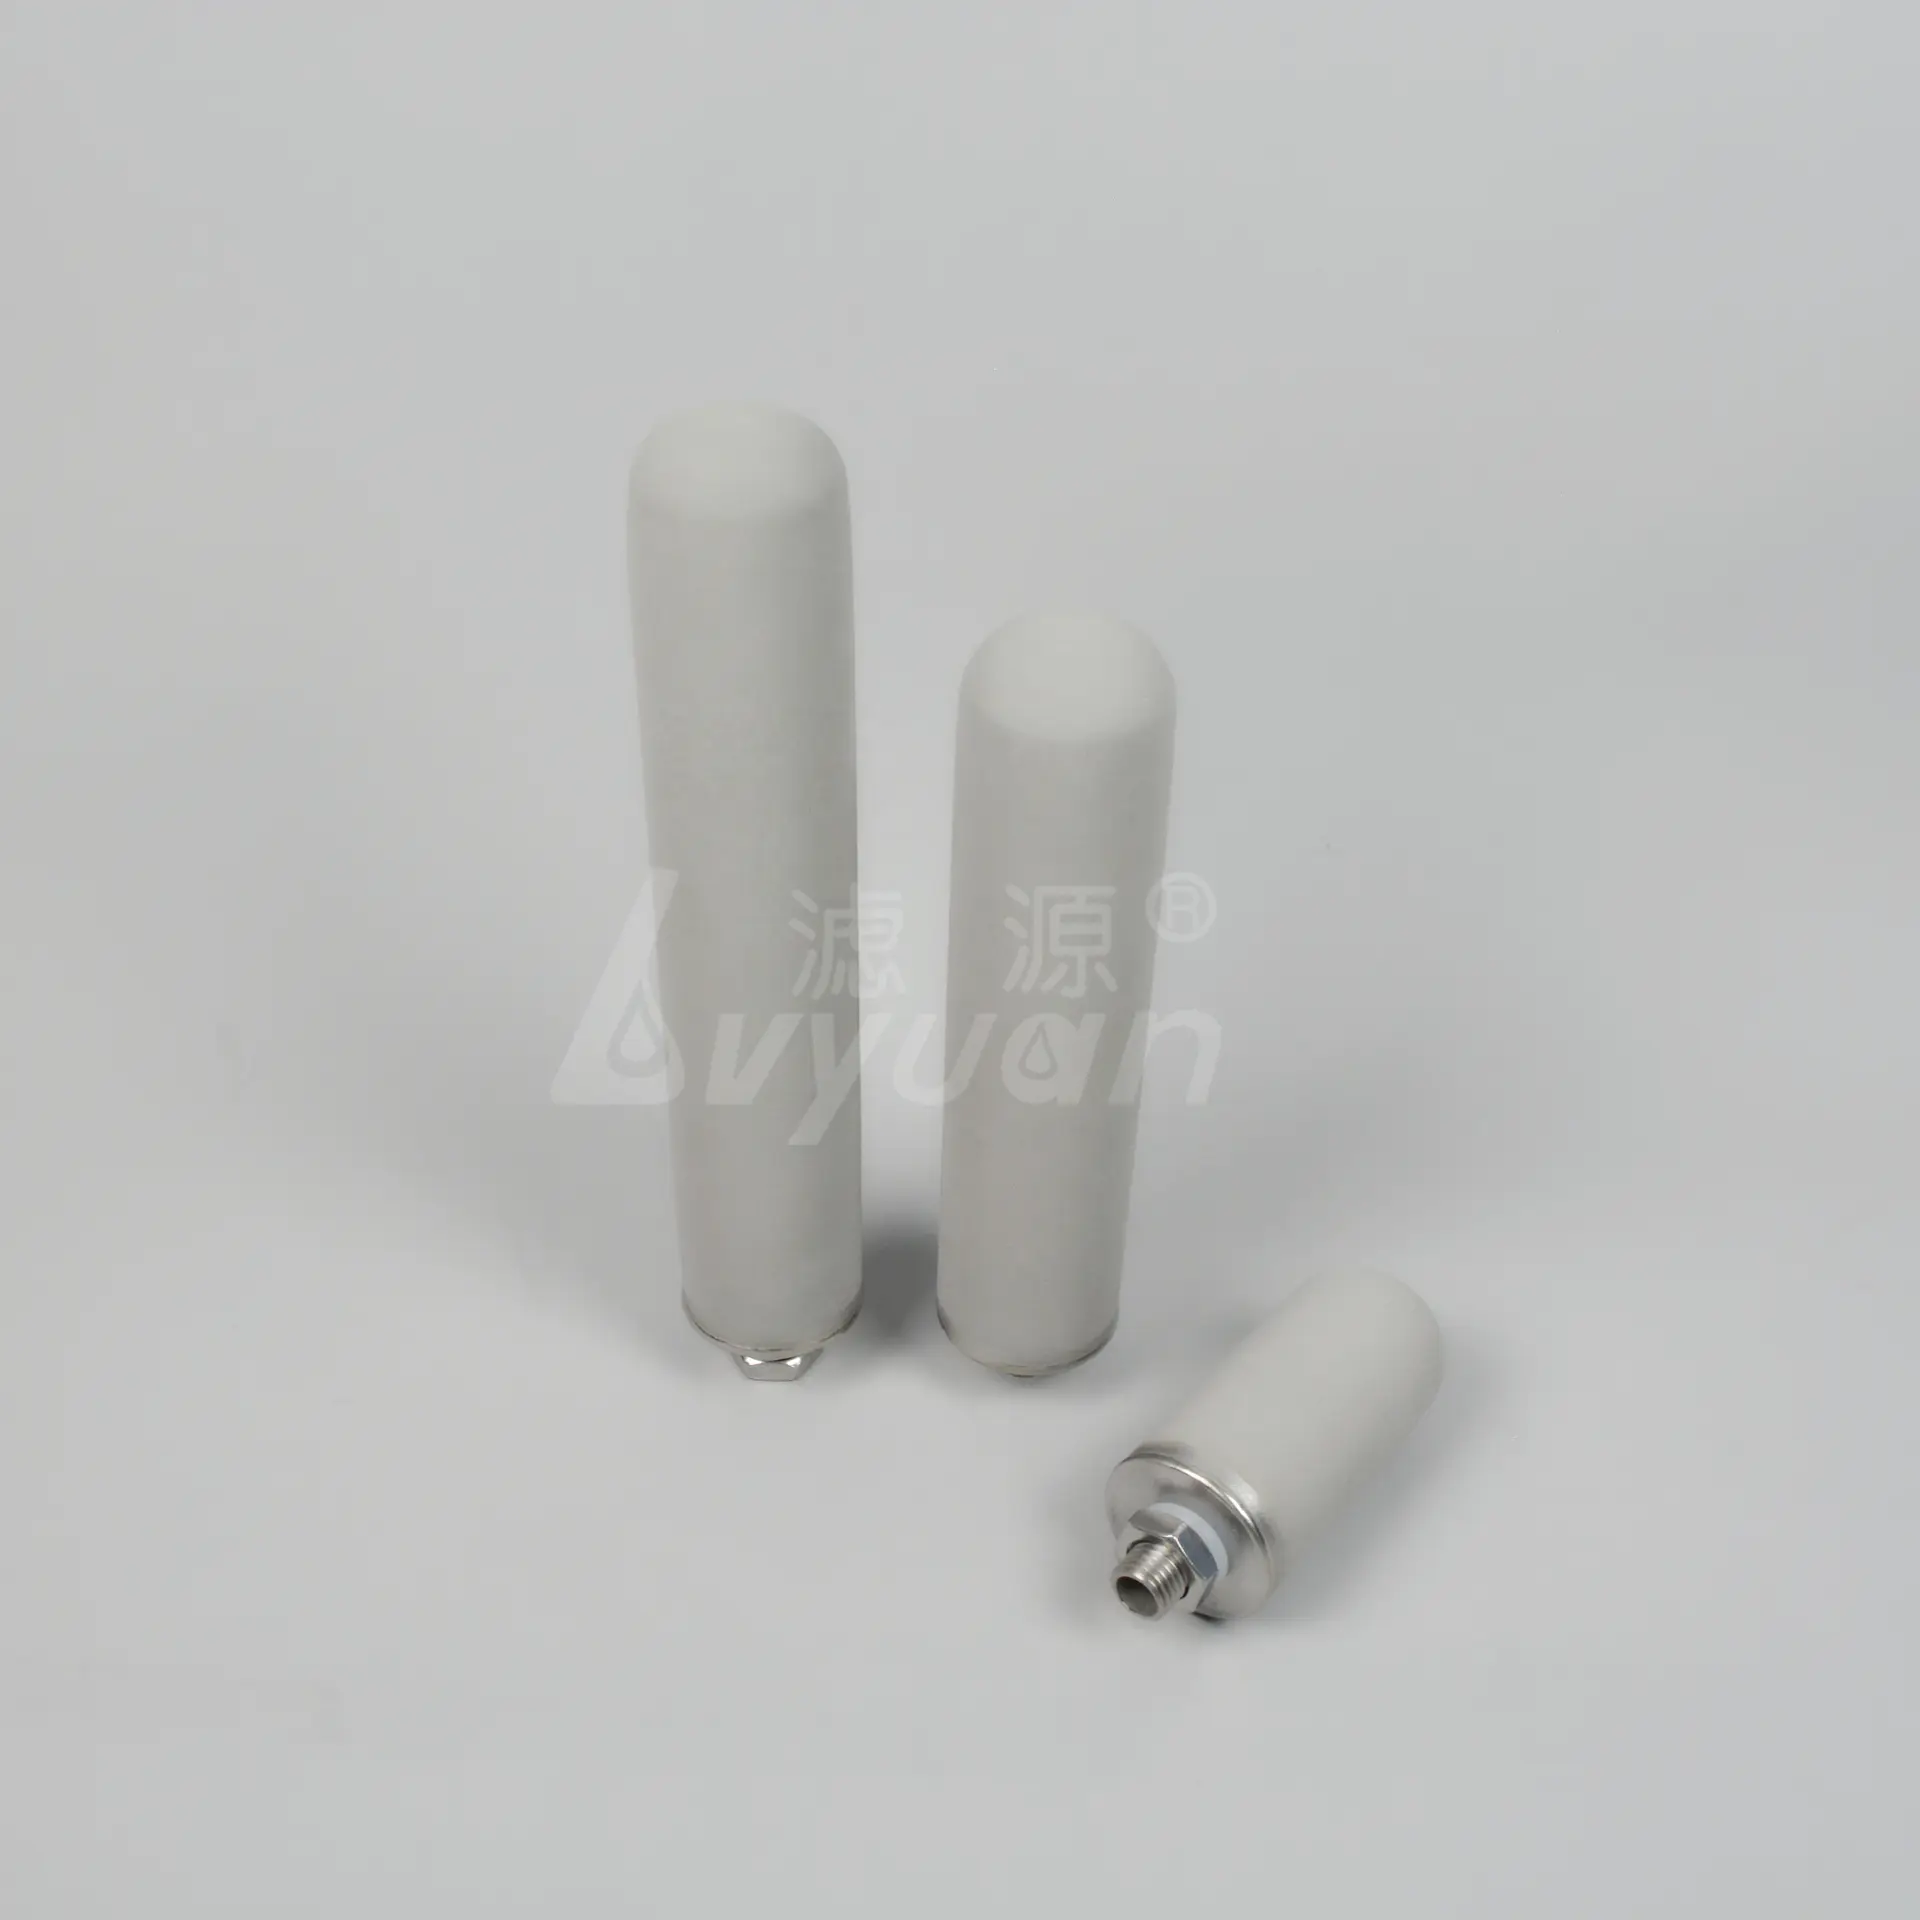 10 20 30 40 inch 5 Micron Porous Sintered Metal filter tube Titanium water Filter cartridge for filtration